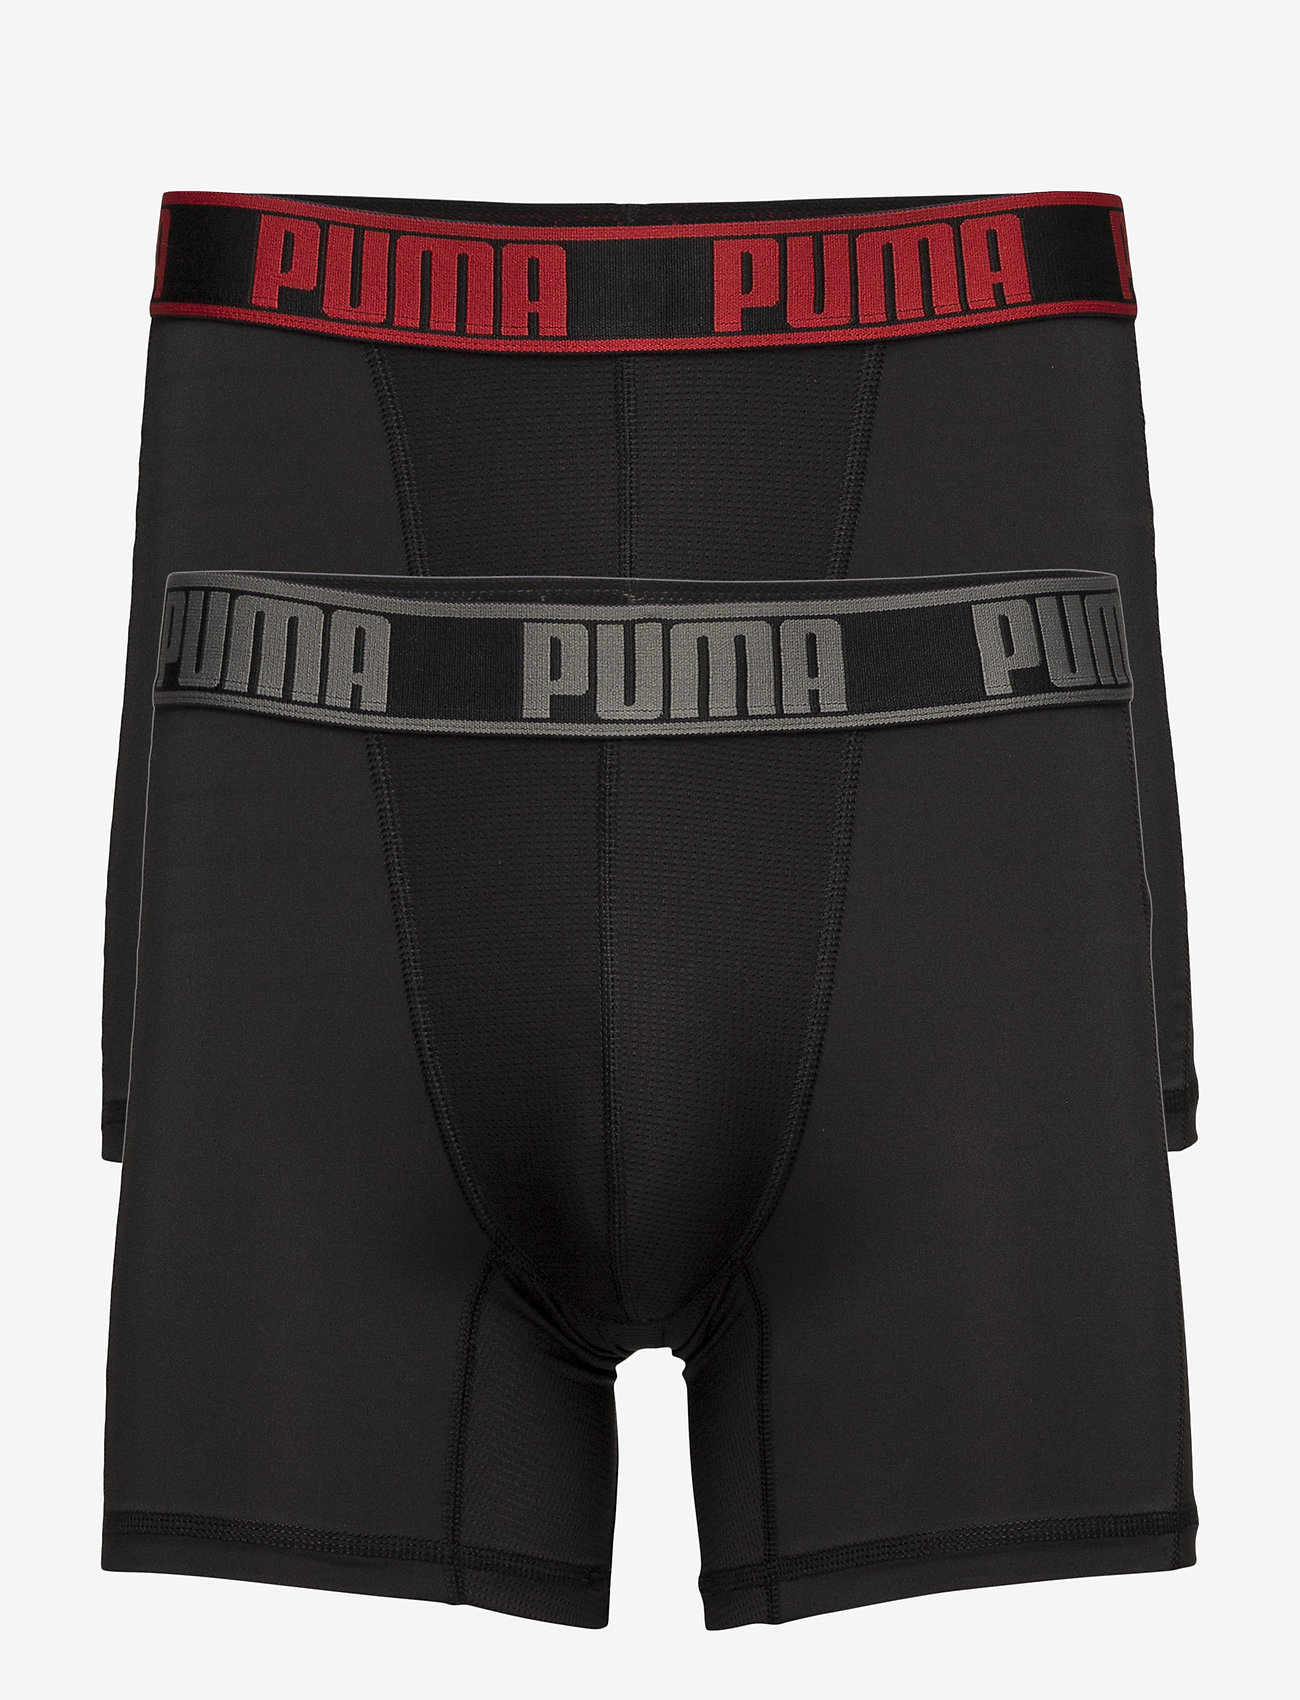 PUMA Puma Active Boxer 2p Packed - Underwear | Boozt.com